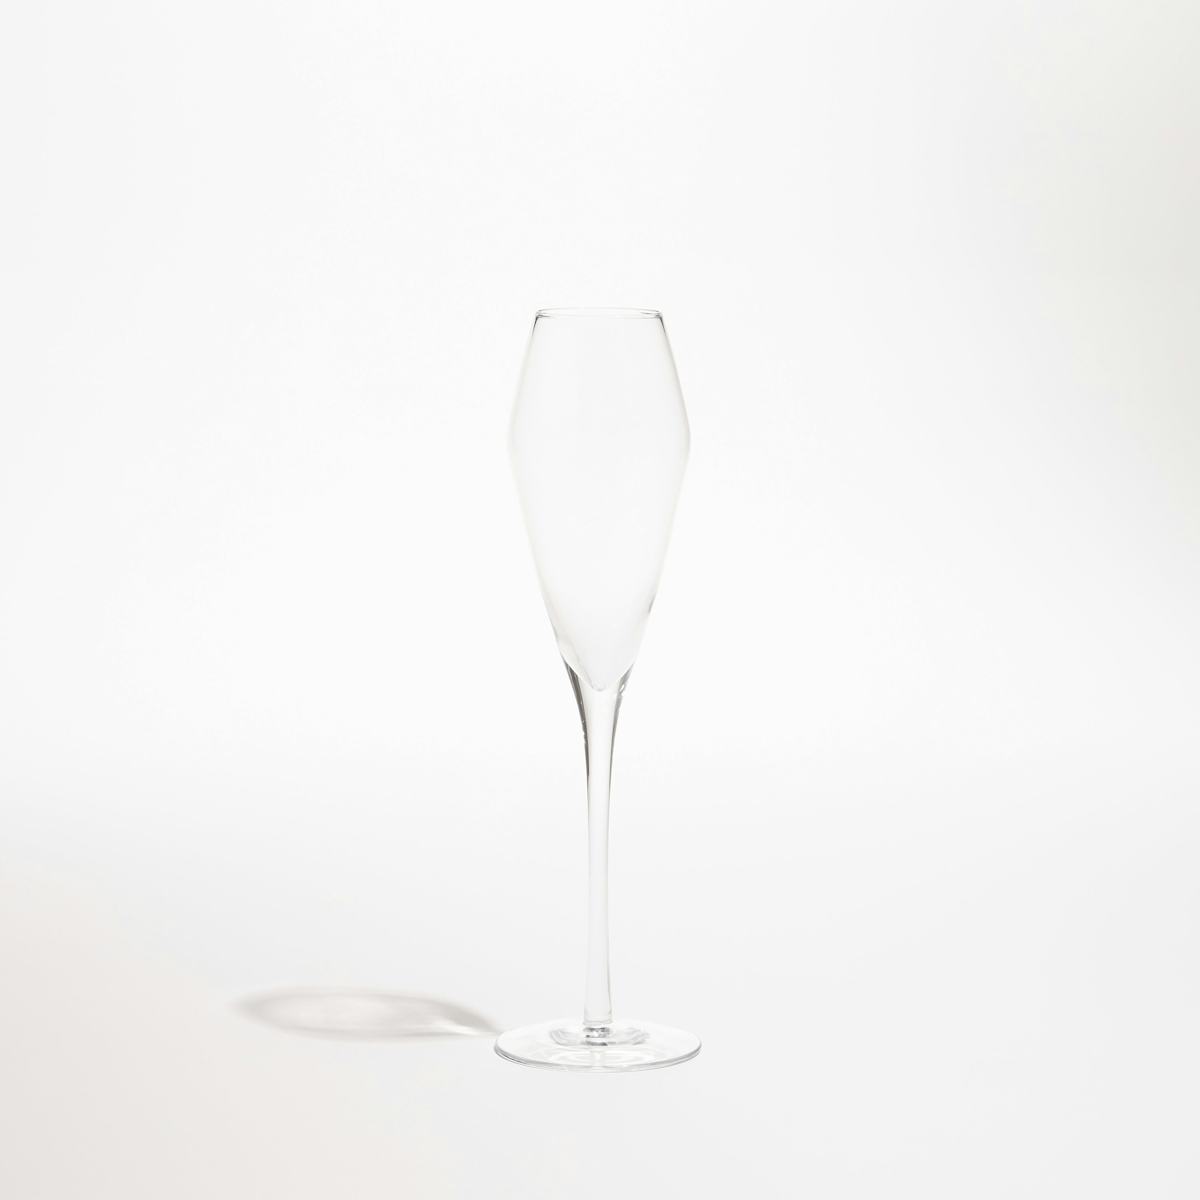 ChampagneGlassesSetOf4_Clear_Home_StillLife_1x1_0077.jpg